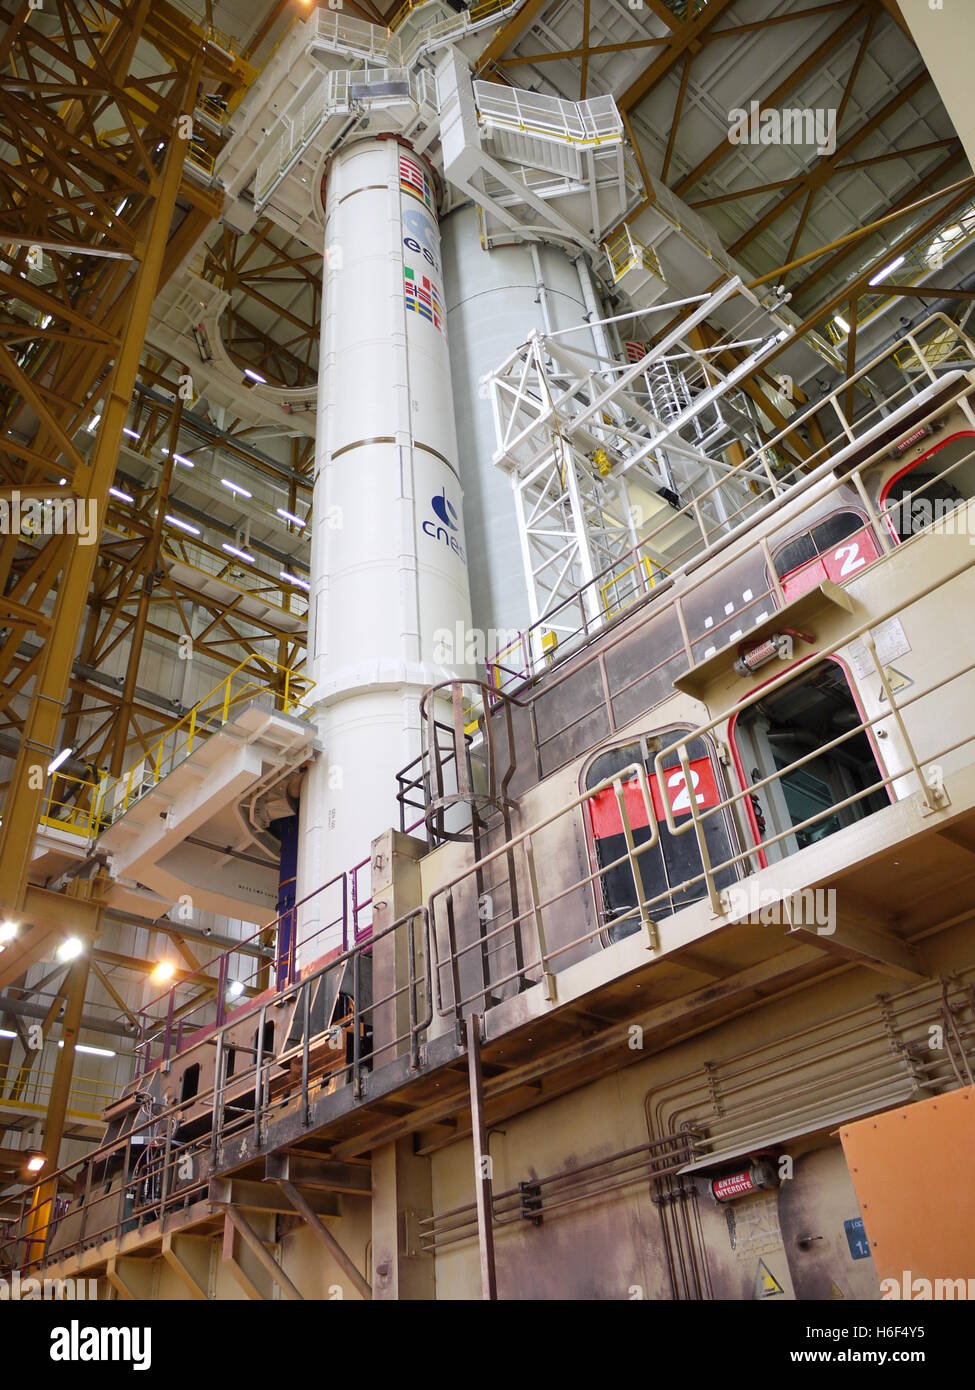 European launcher Ariane 5  final integration take place in Kourou spaceport in French Guiana Stock Photo